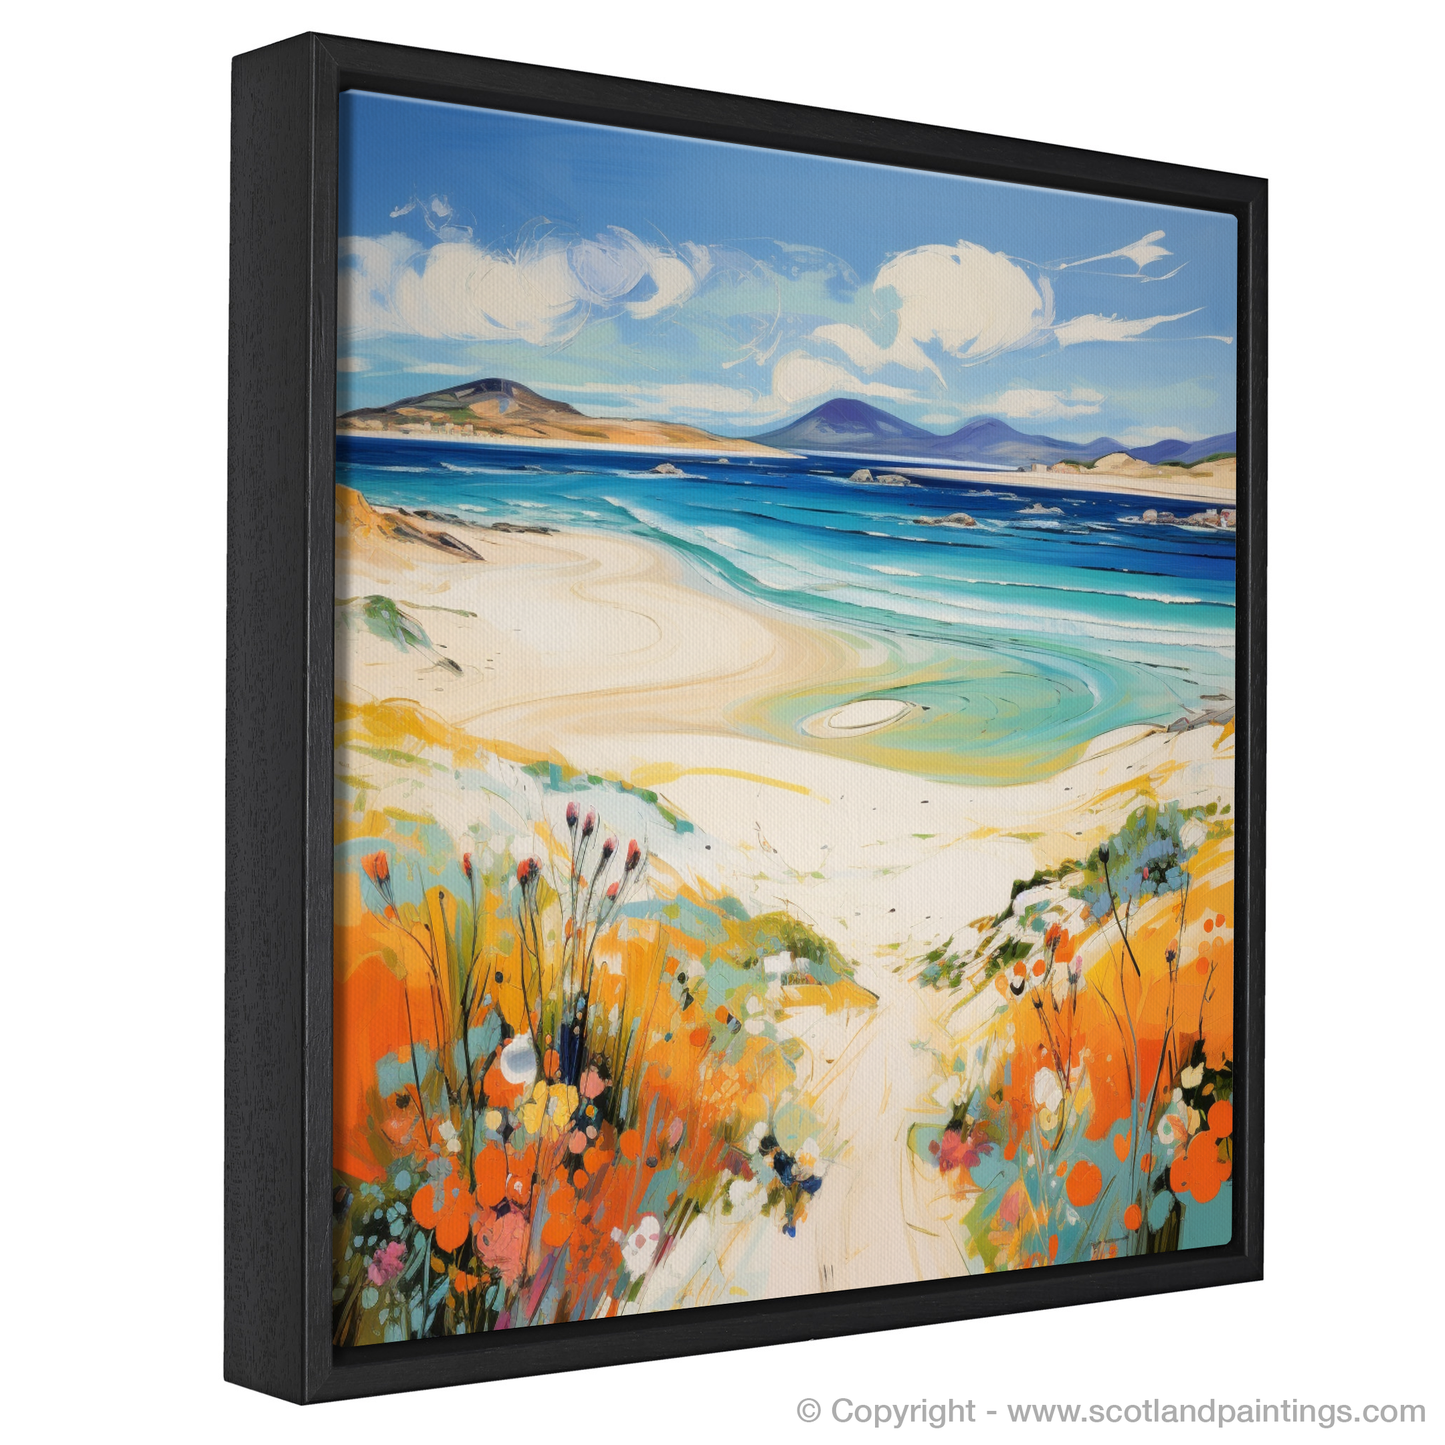 Painting and Art Print of Luskentyre Beach, Isle of Harris entitled "Fauvist Splendour of Luskentyre Beach".